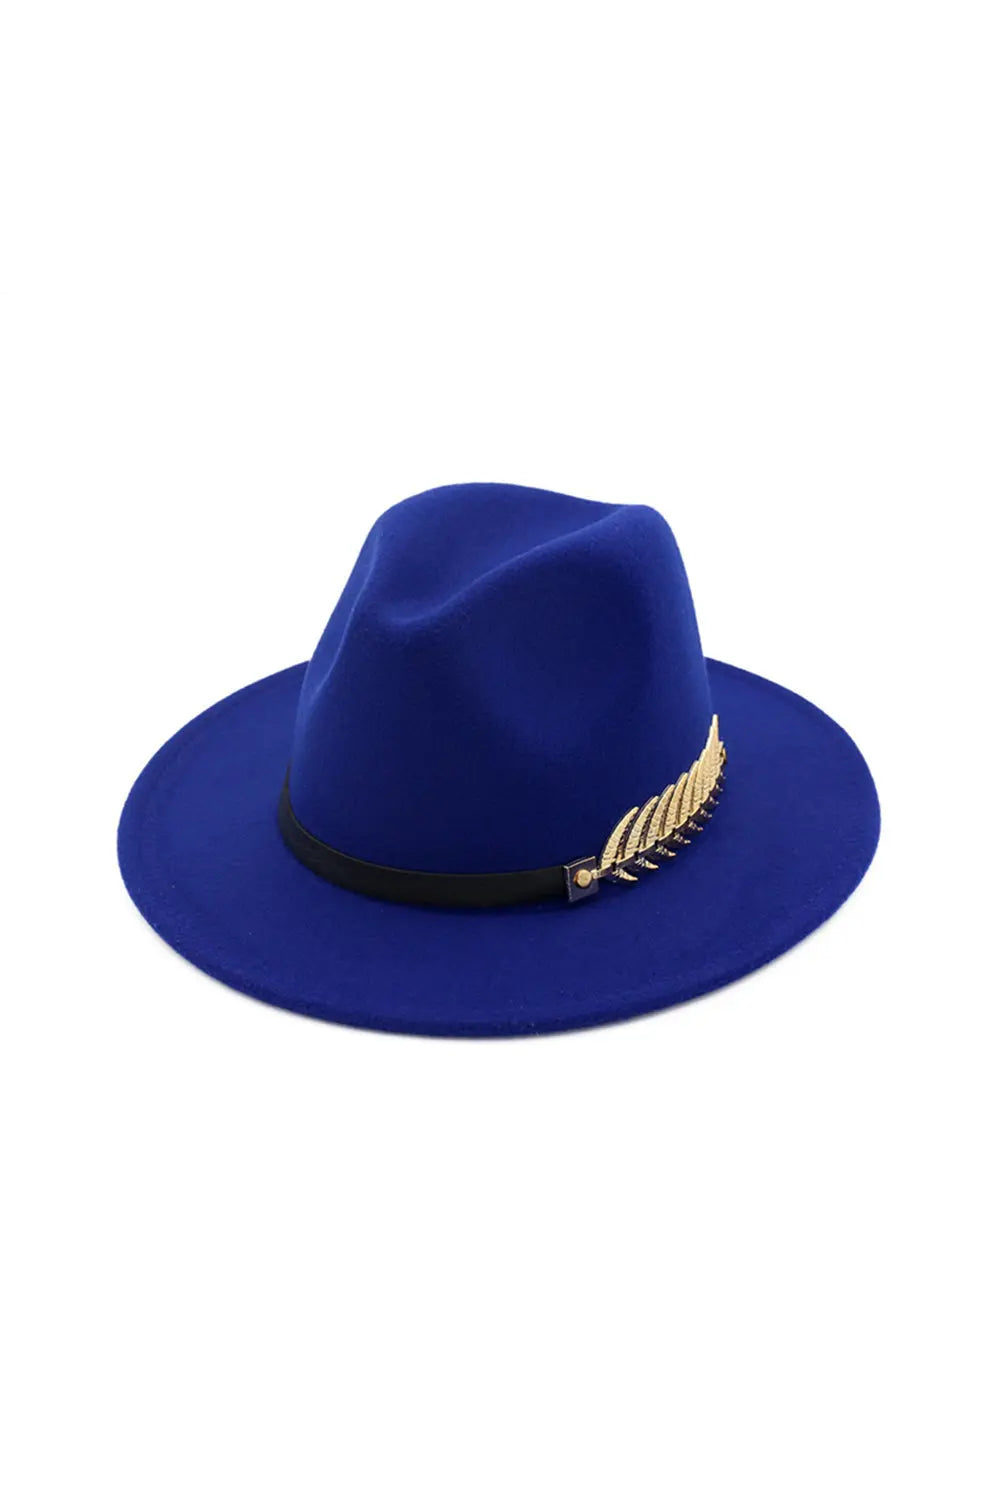 Jazz Hat - Blue - Strange Clothes